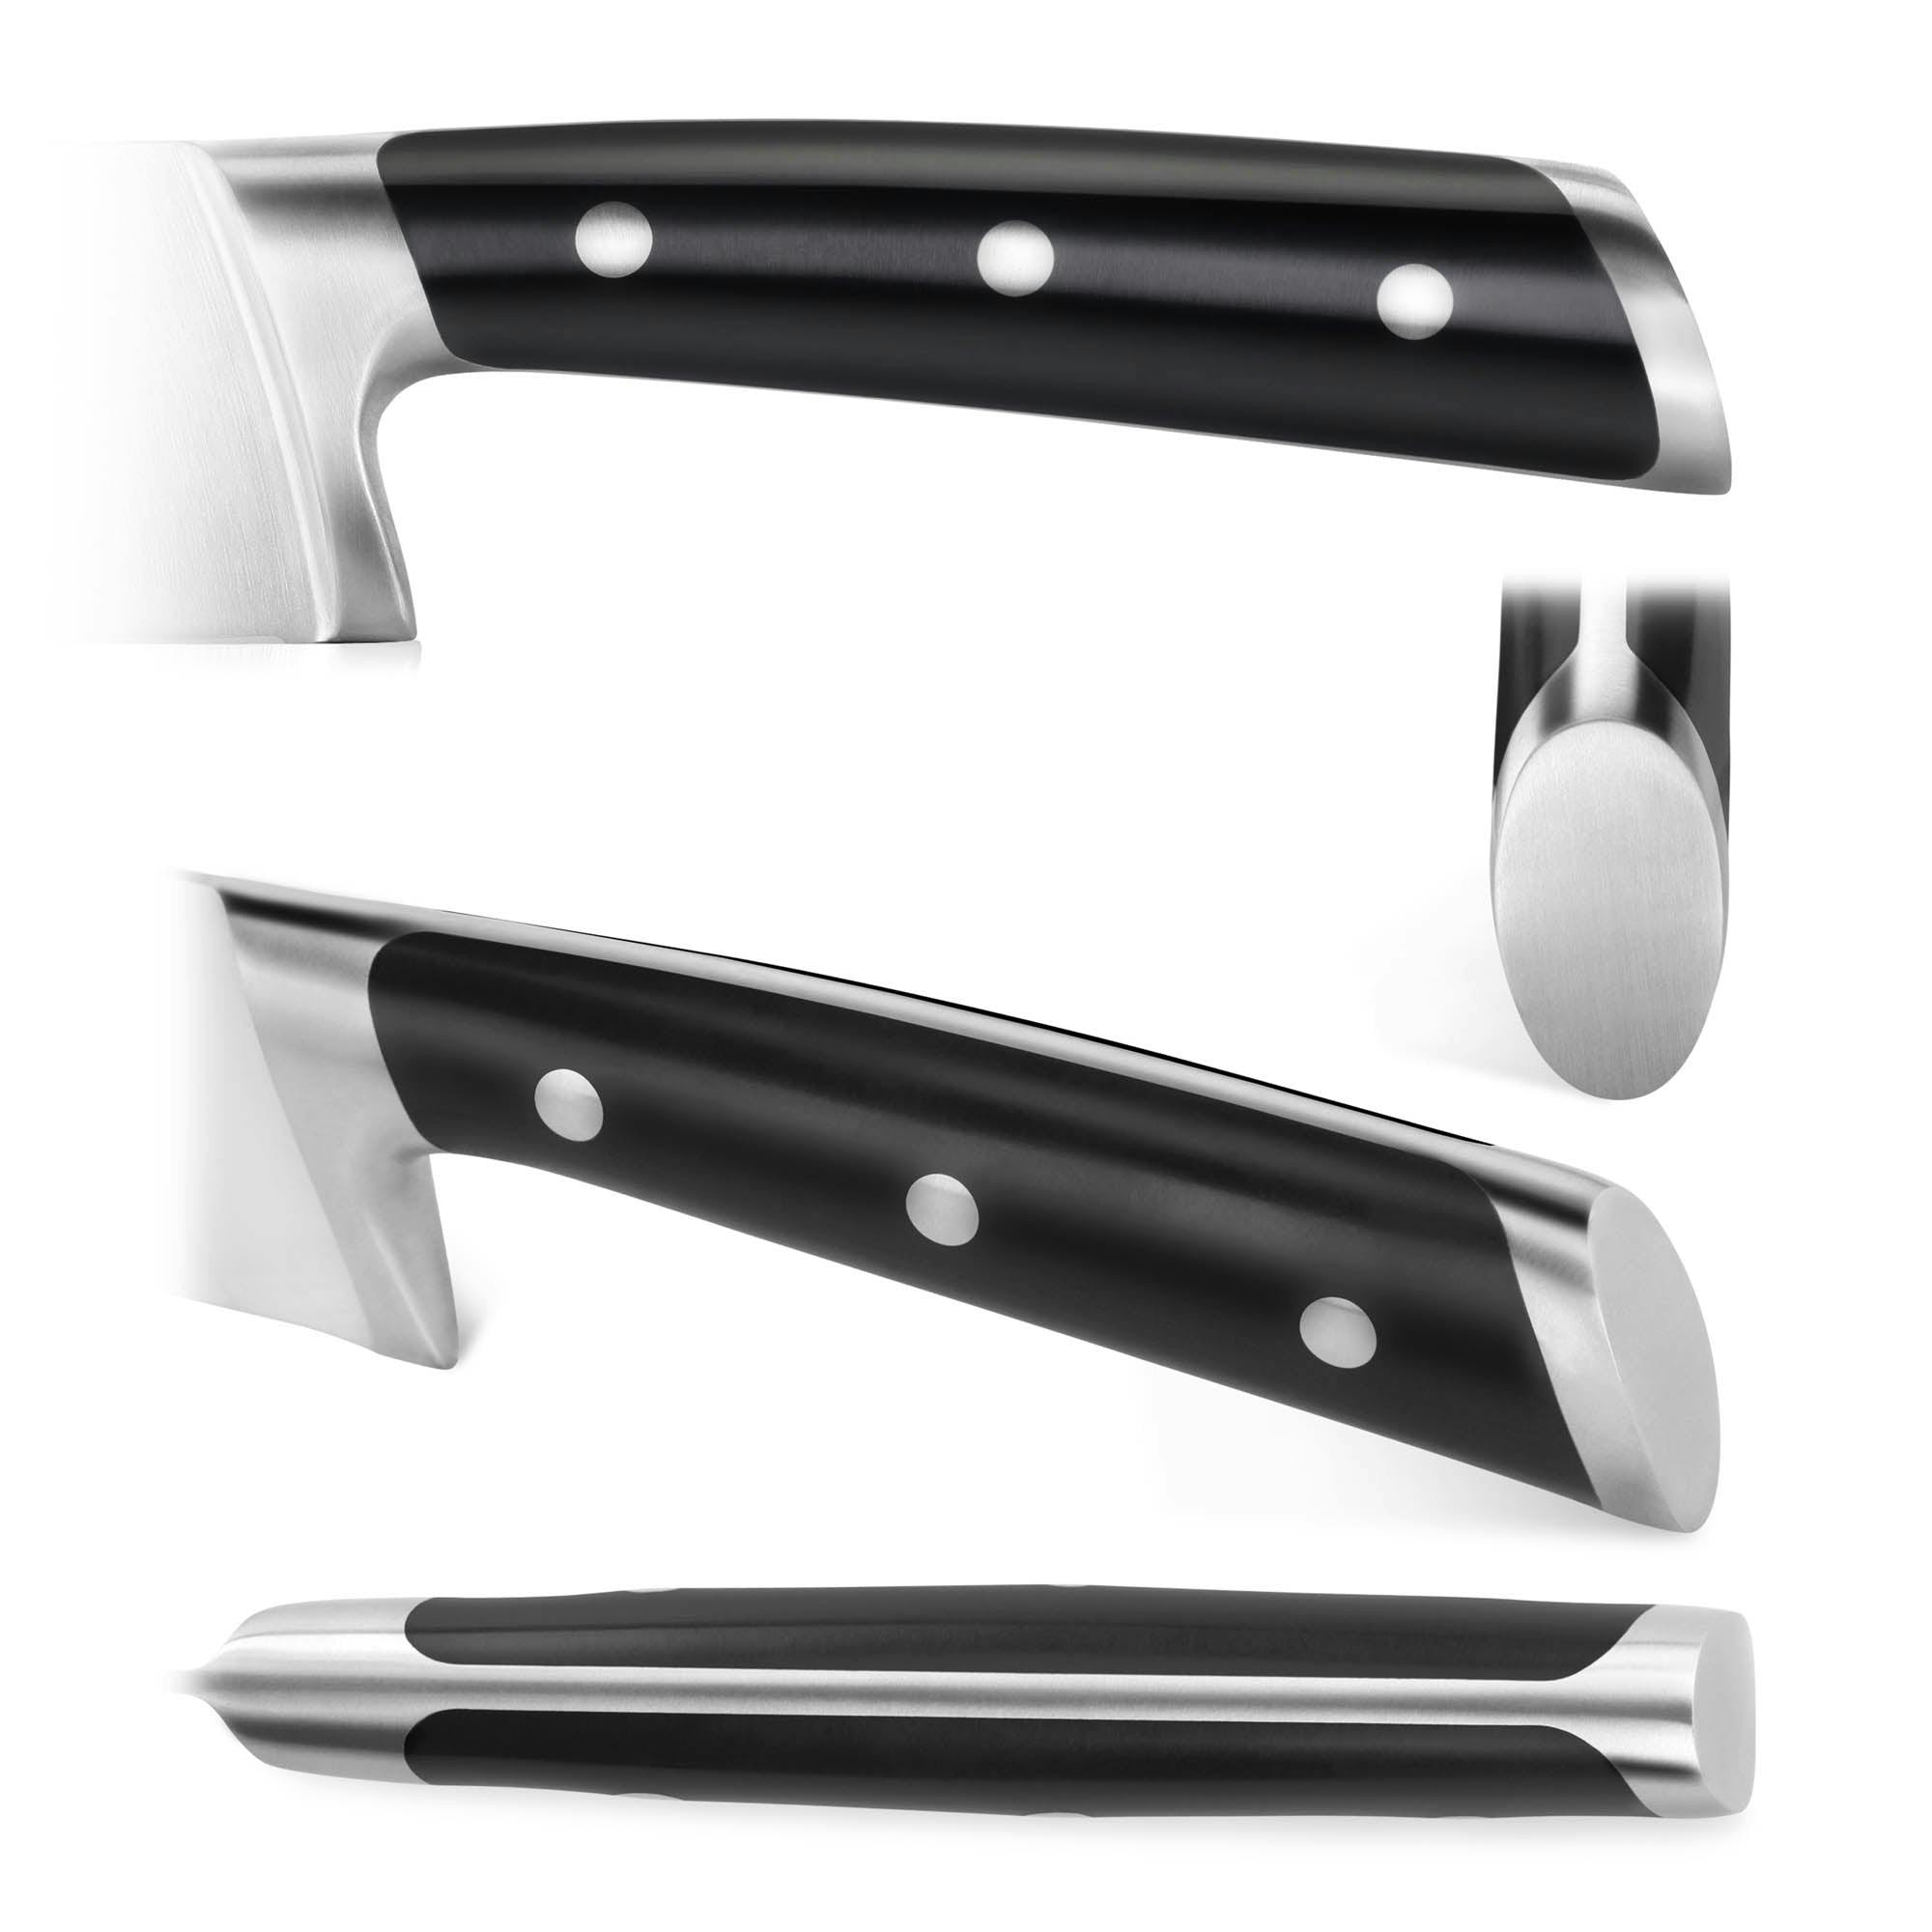 Cangshan TS Series 17-pc Knife Block Set